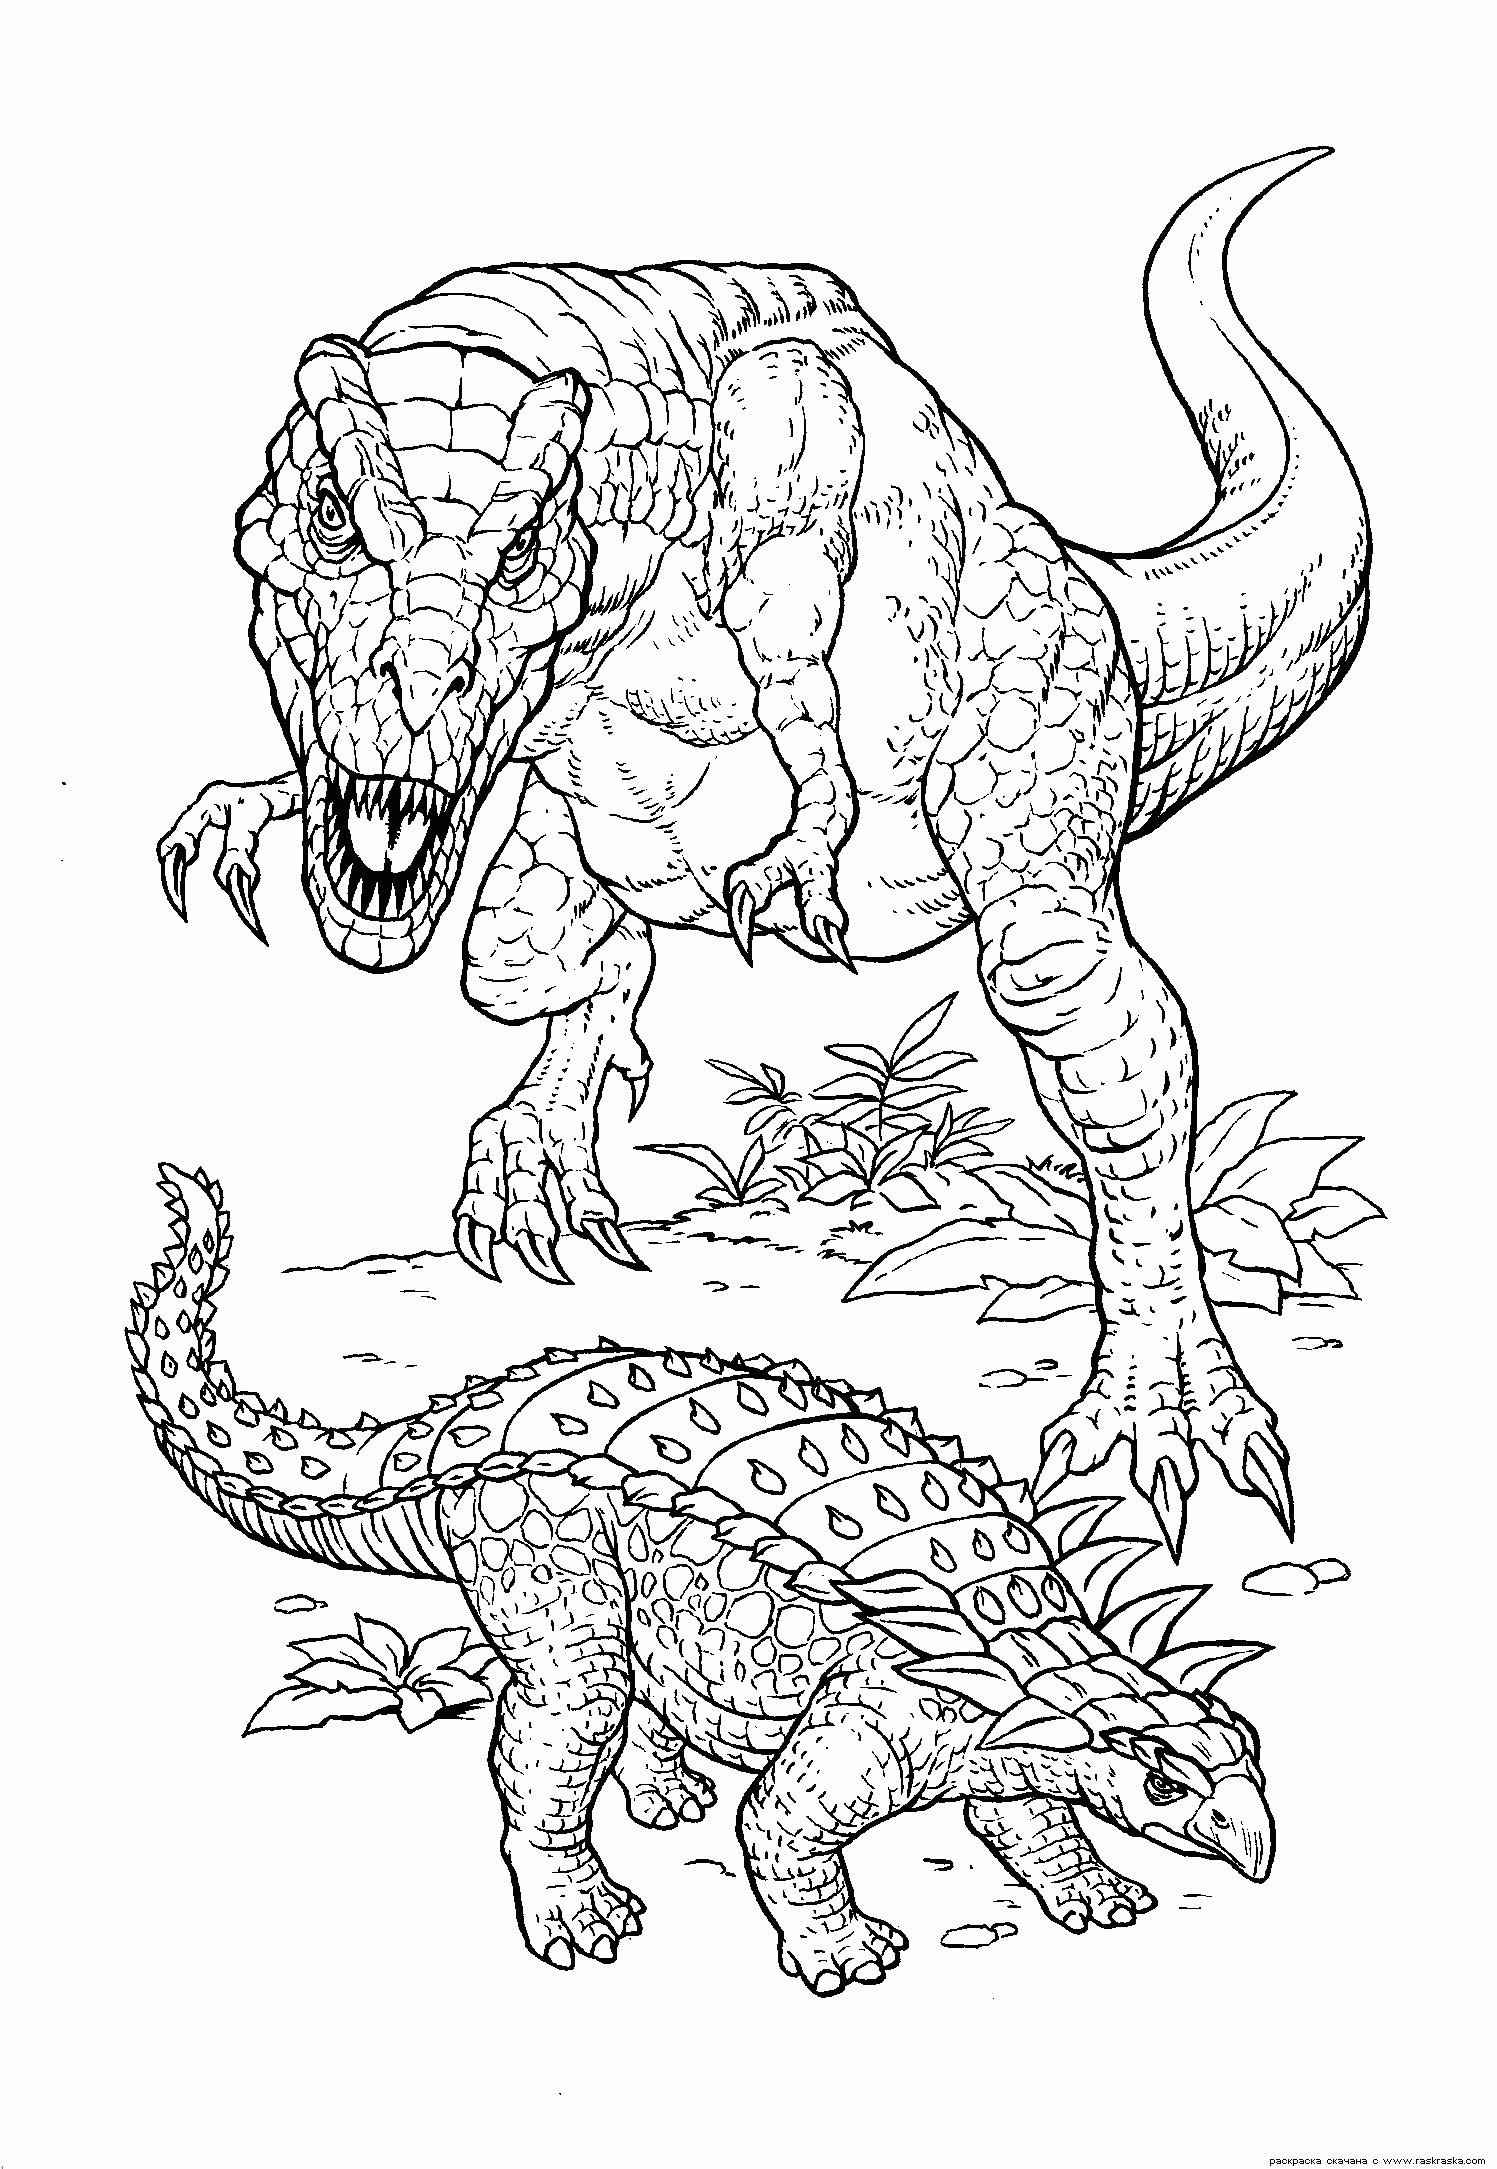 Jurassic World Indominus Rex Coloring Page - Subeloa11 tout Coloriage Dinosaure Jurassic World